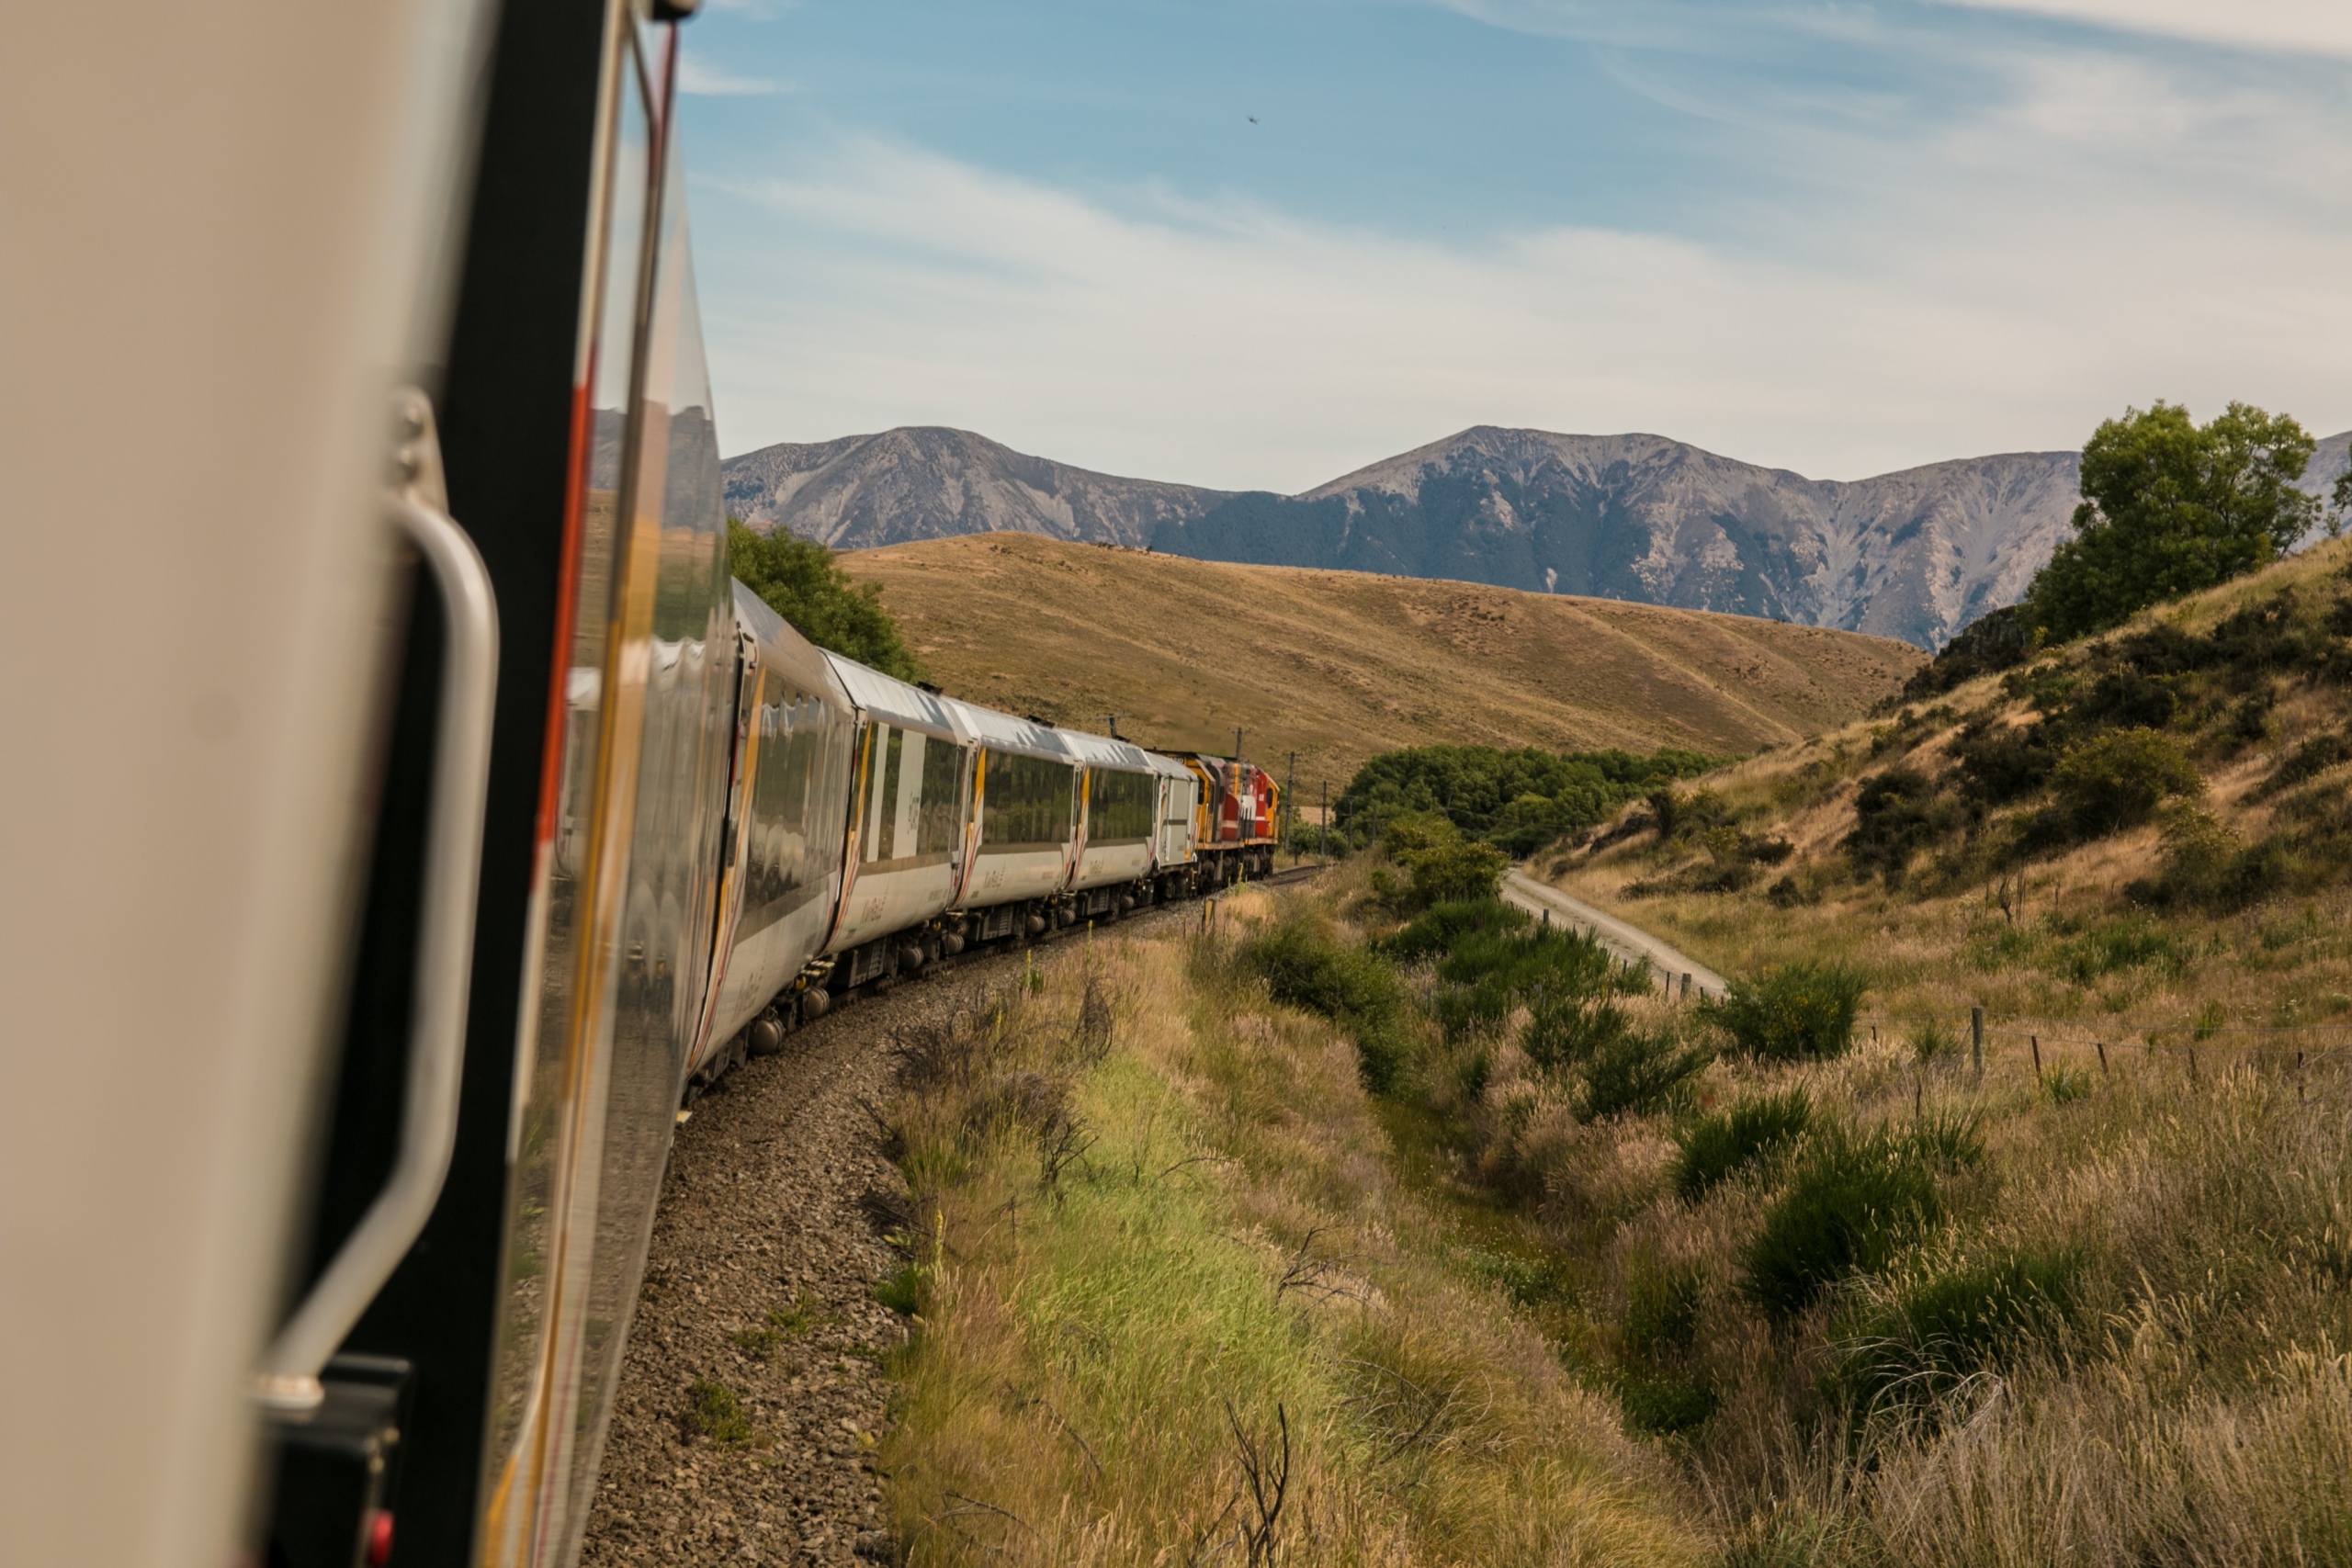 A passenger train travelling through wild, mountainous landscape.